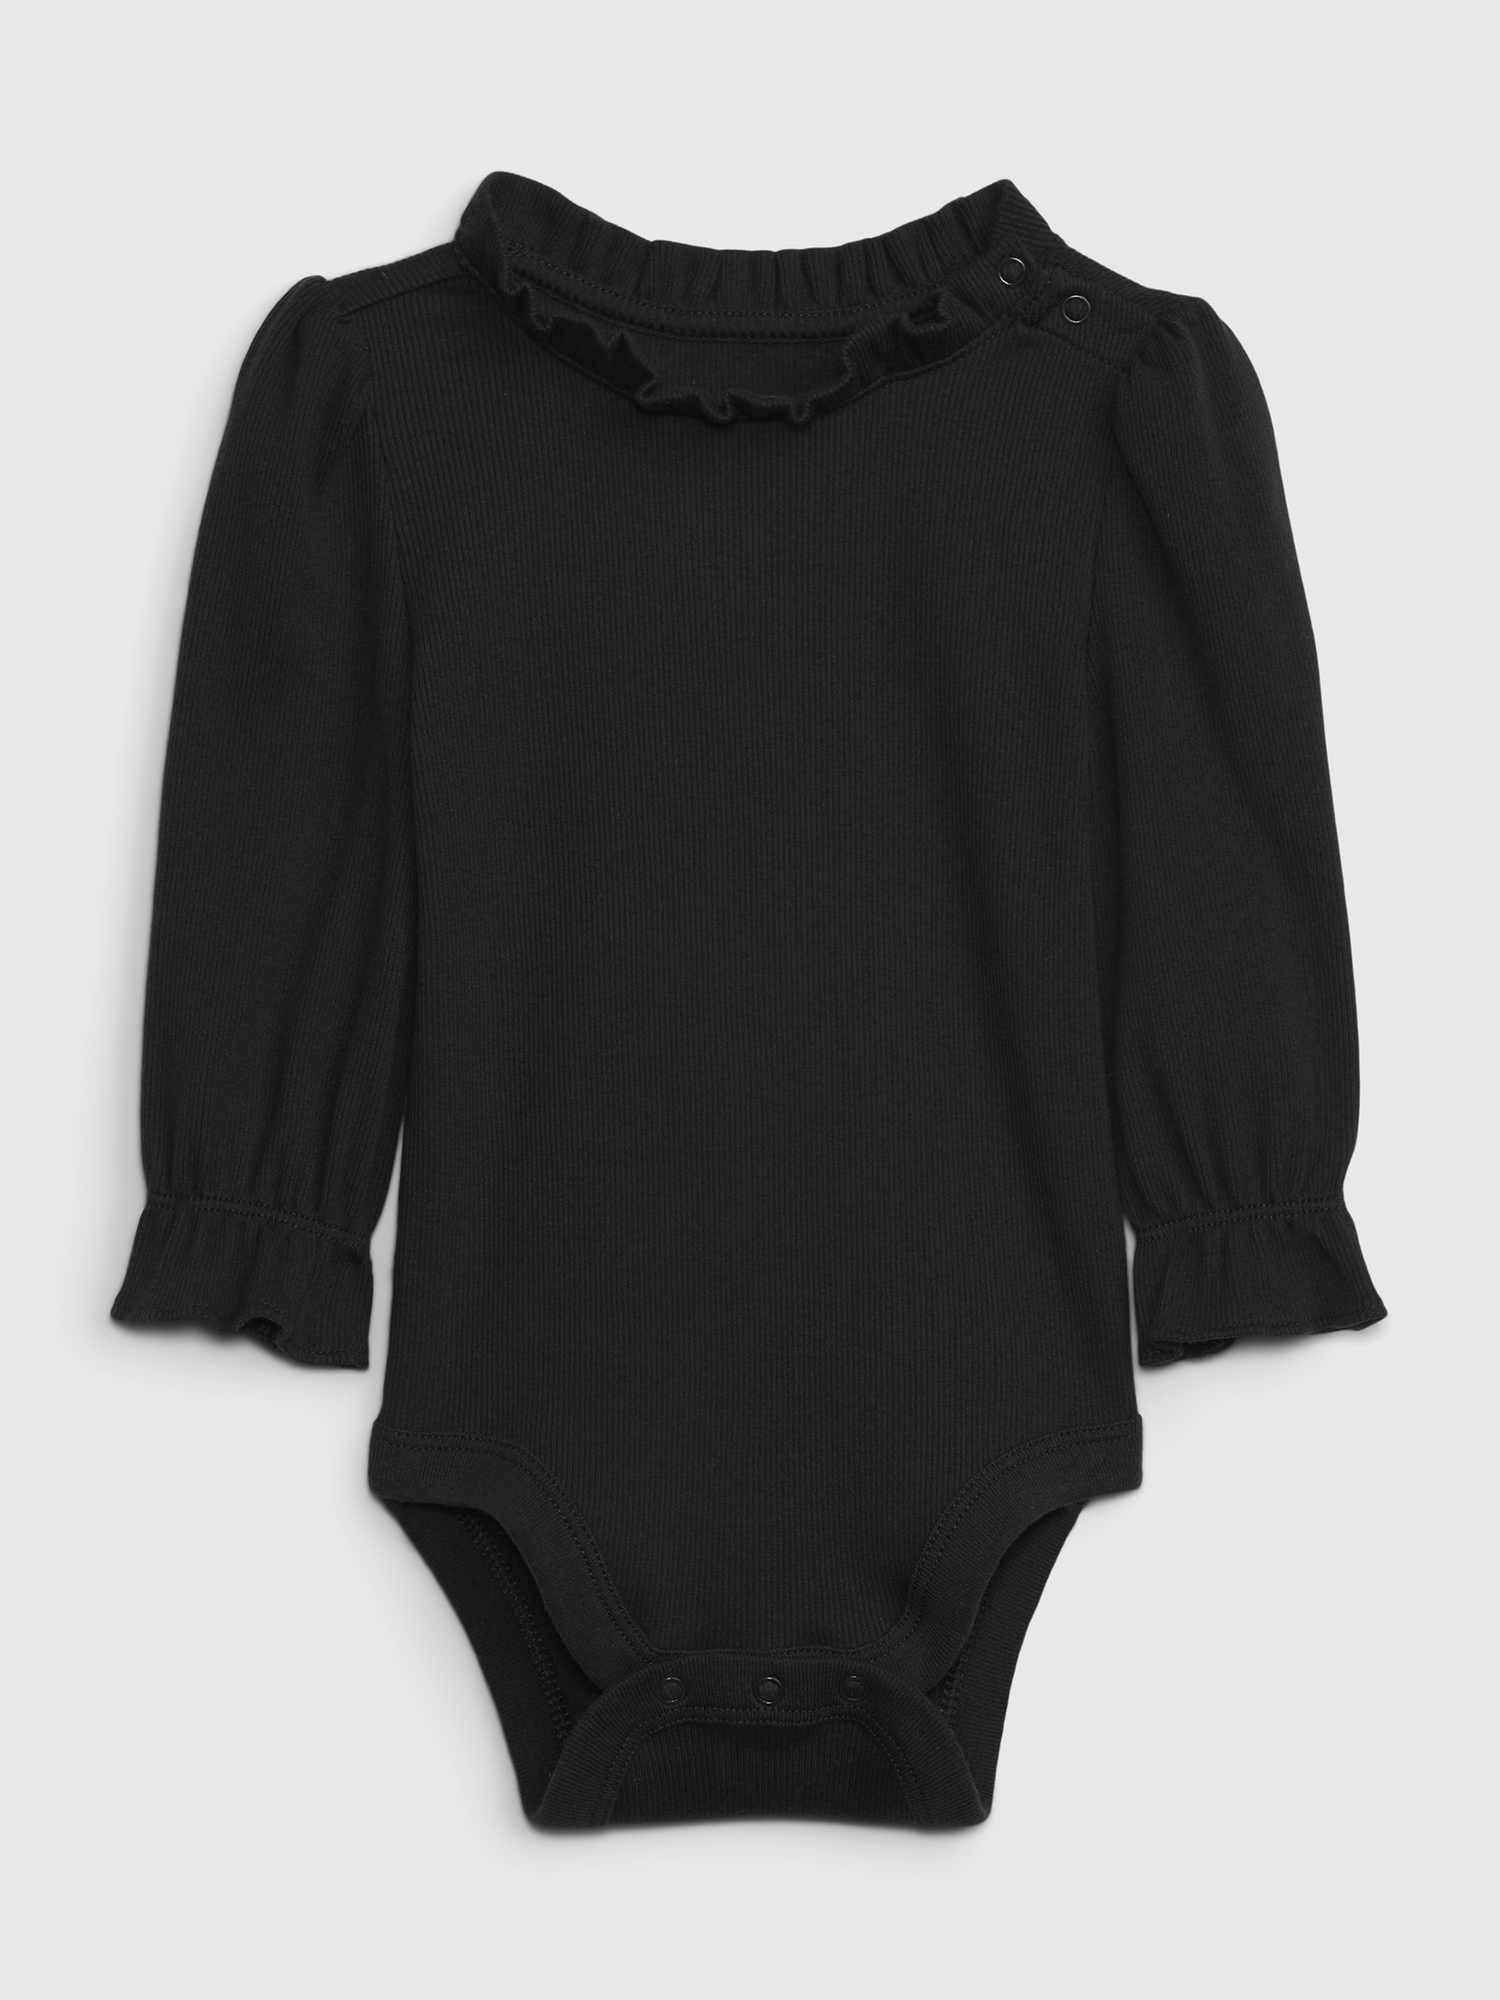 Baby Mix and Match Ruffle Bodysuit | Gap